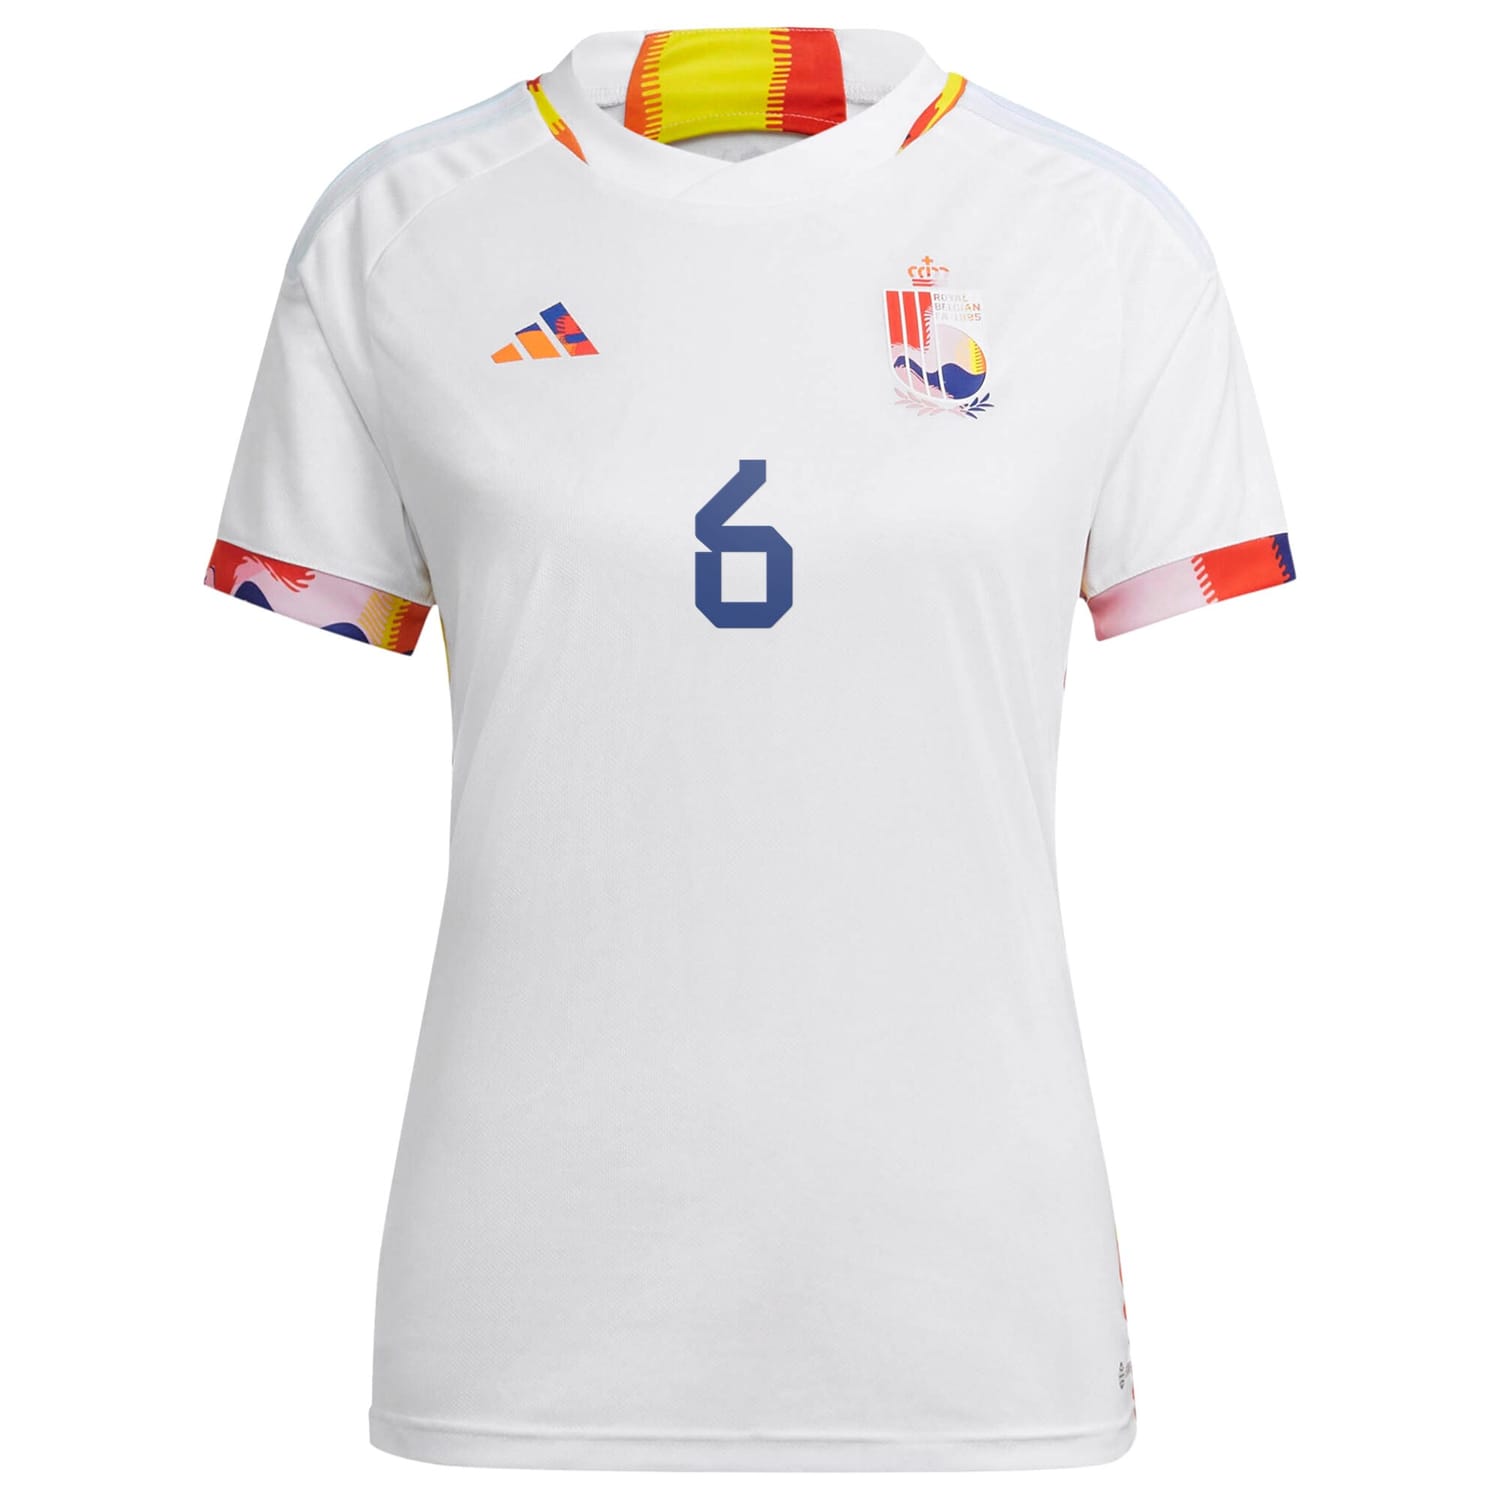 Belgium National Team Away Jersey Shirt 2022 player Axel Witsel 6 printing for Women